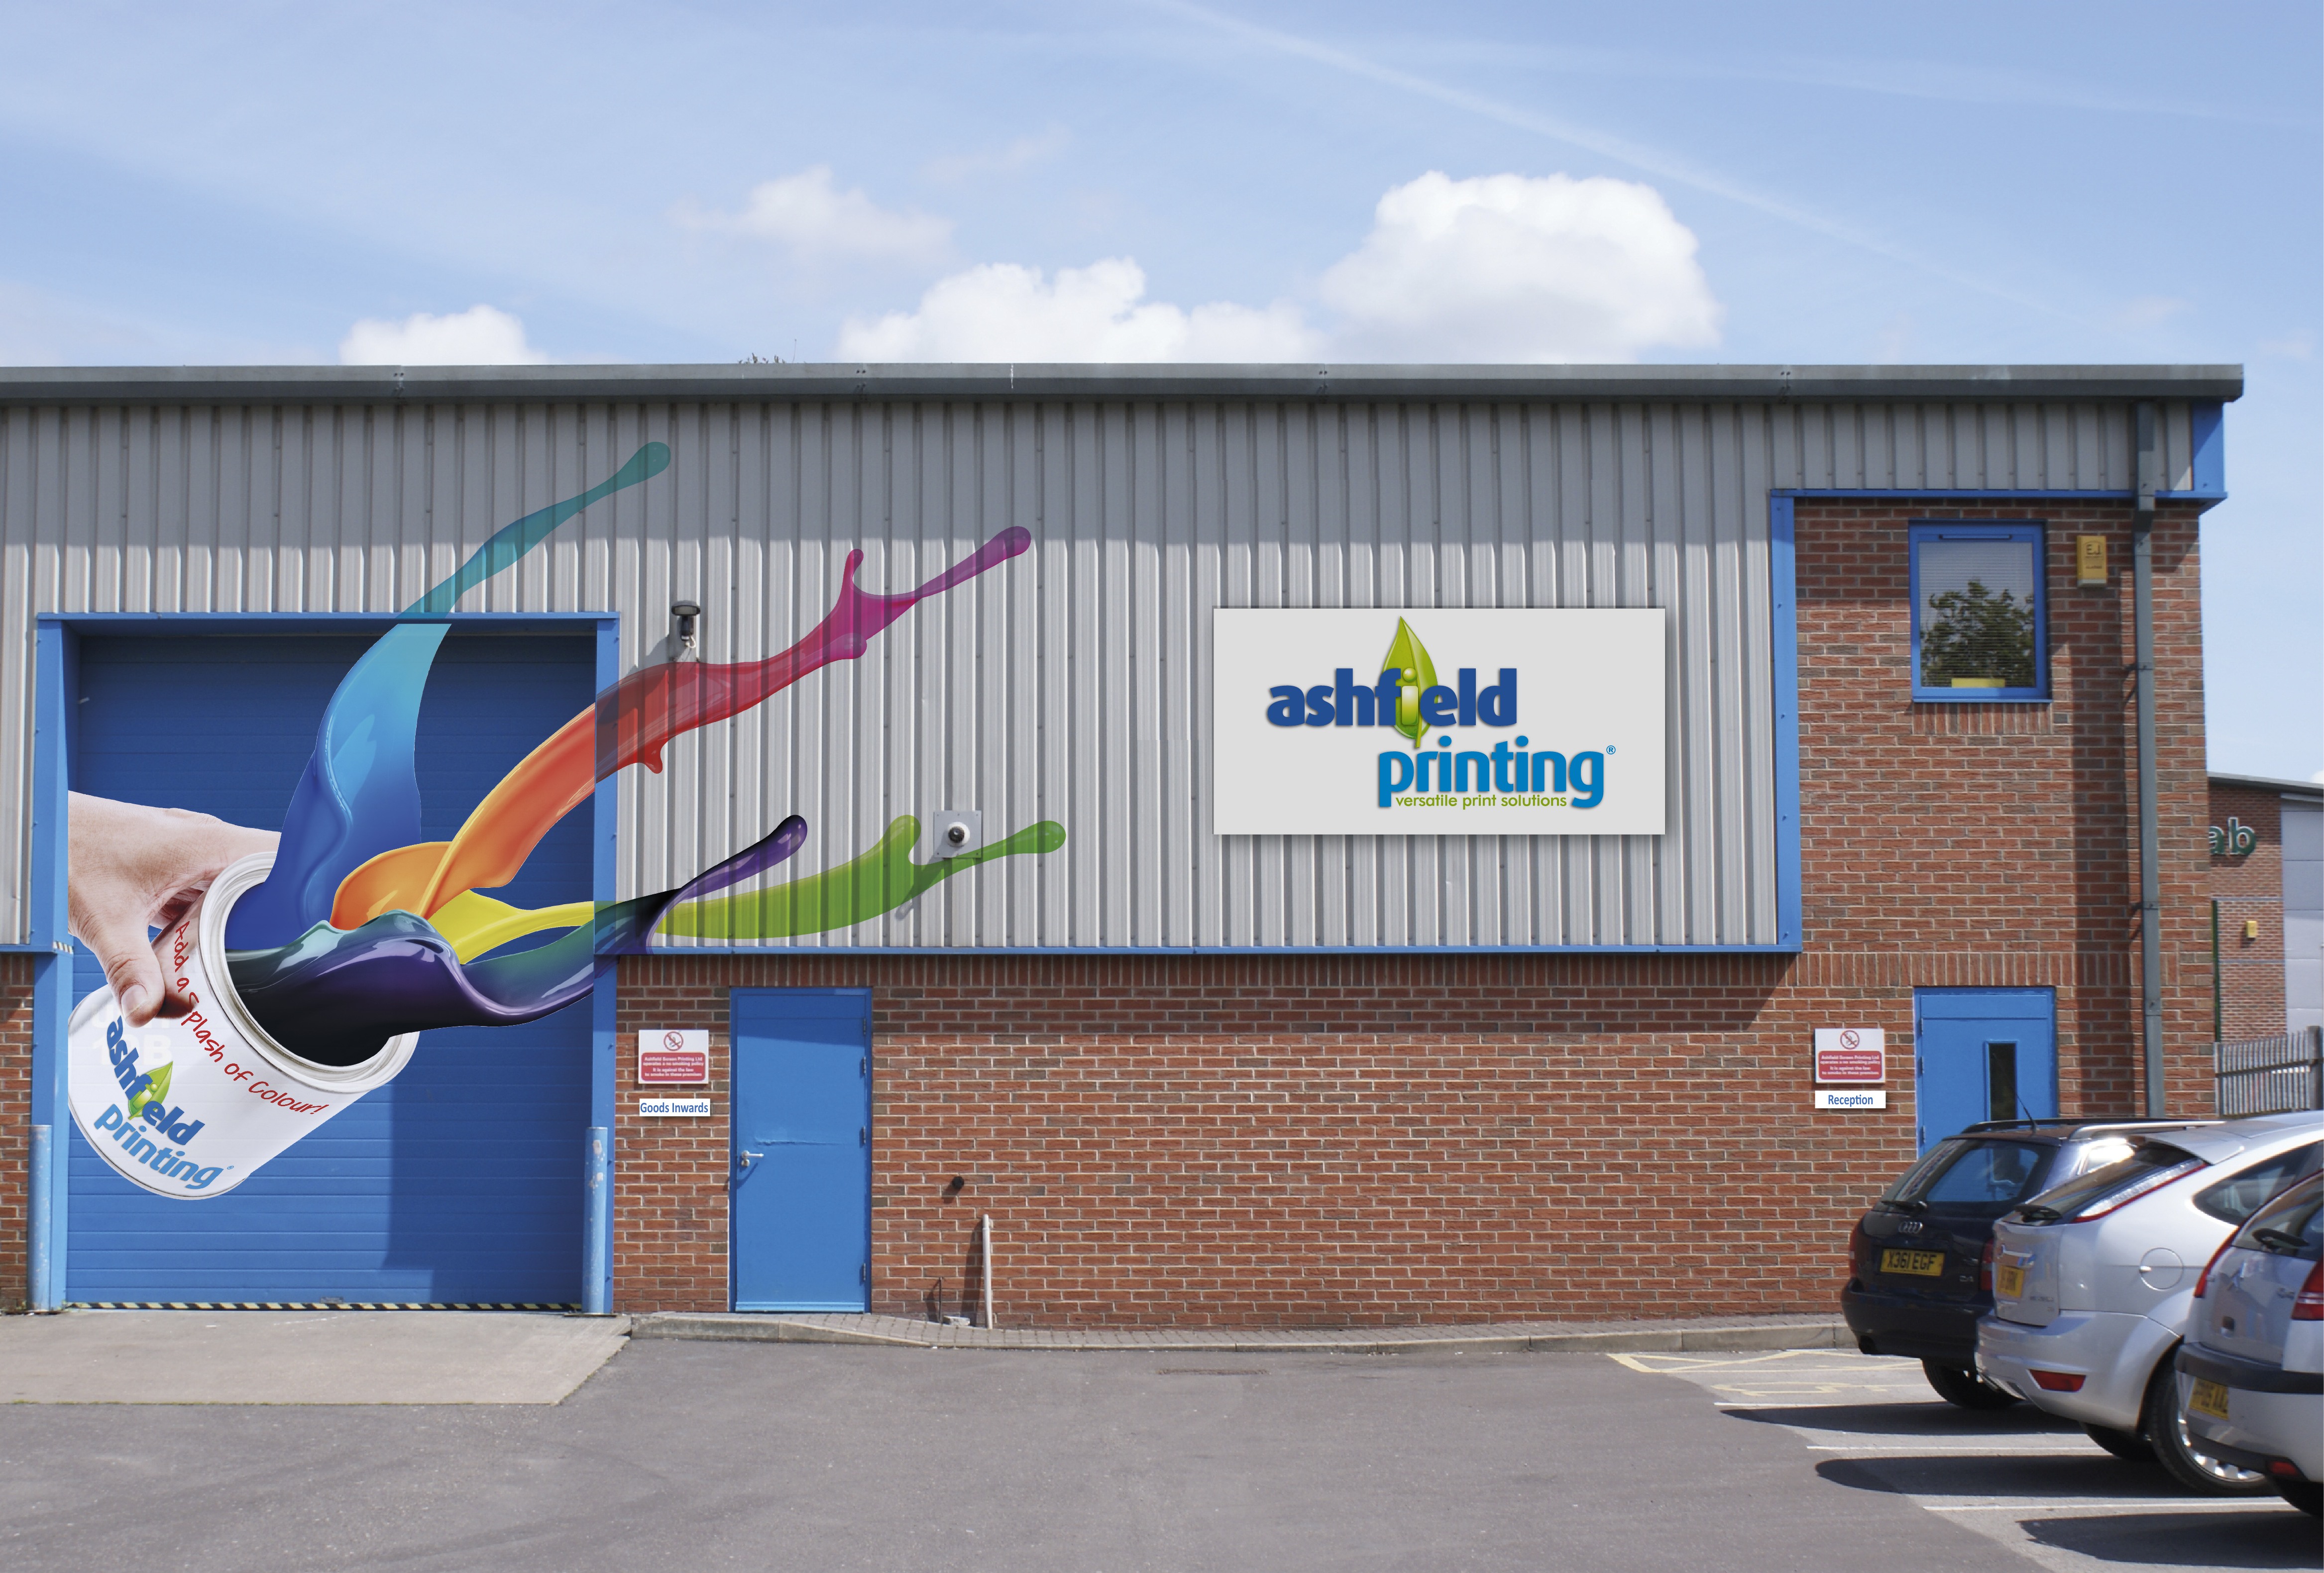 ashfield-printing-factory-front-2015.jpg